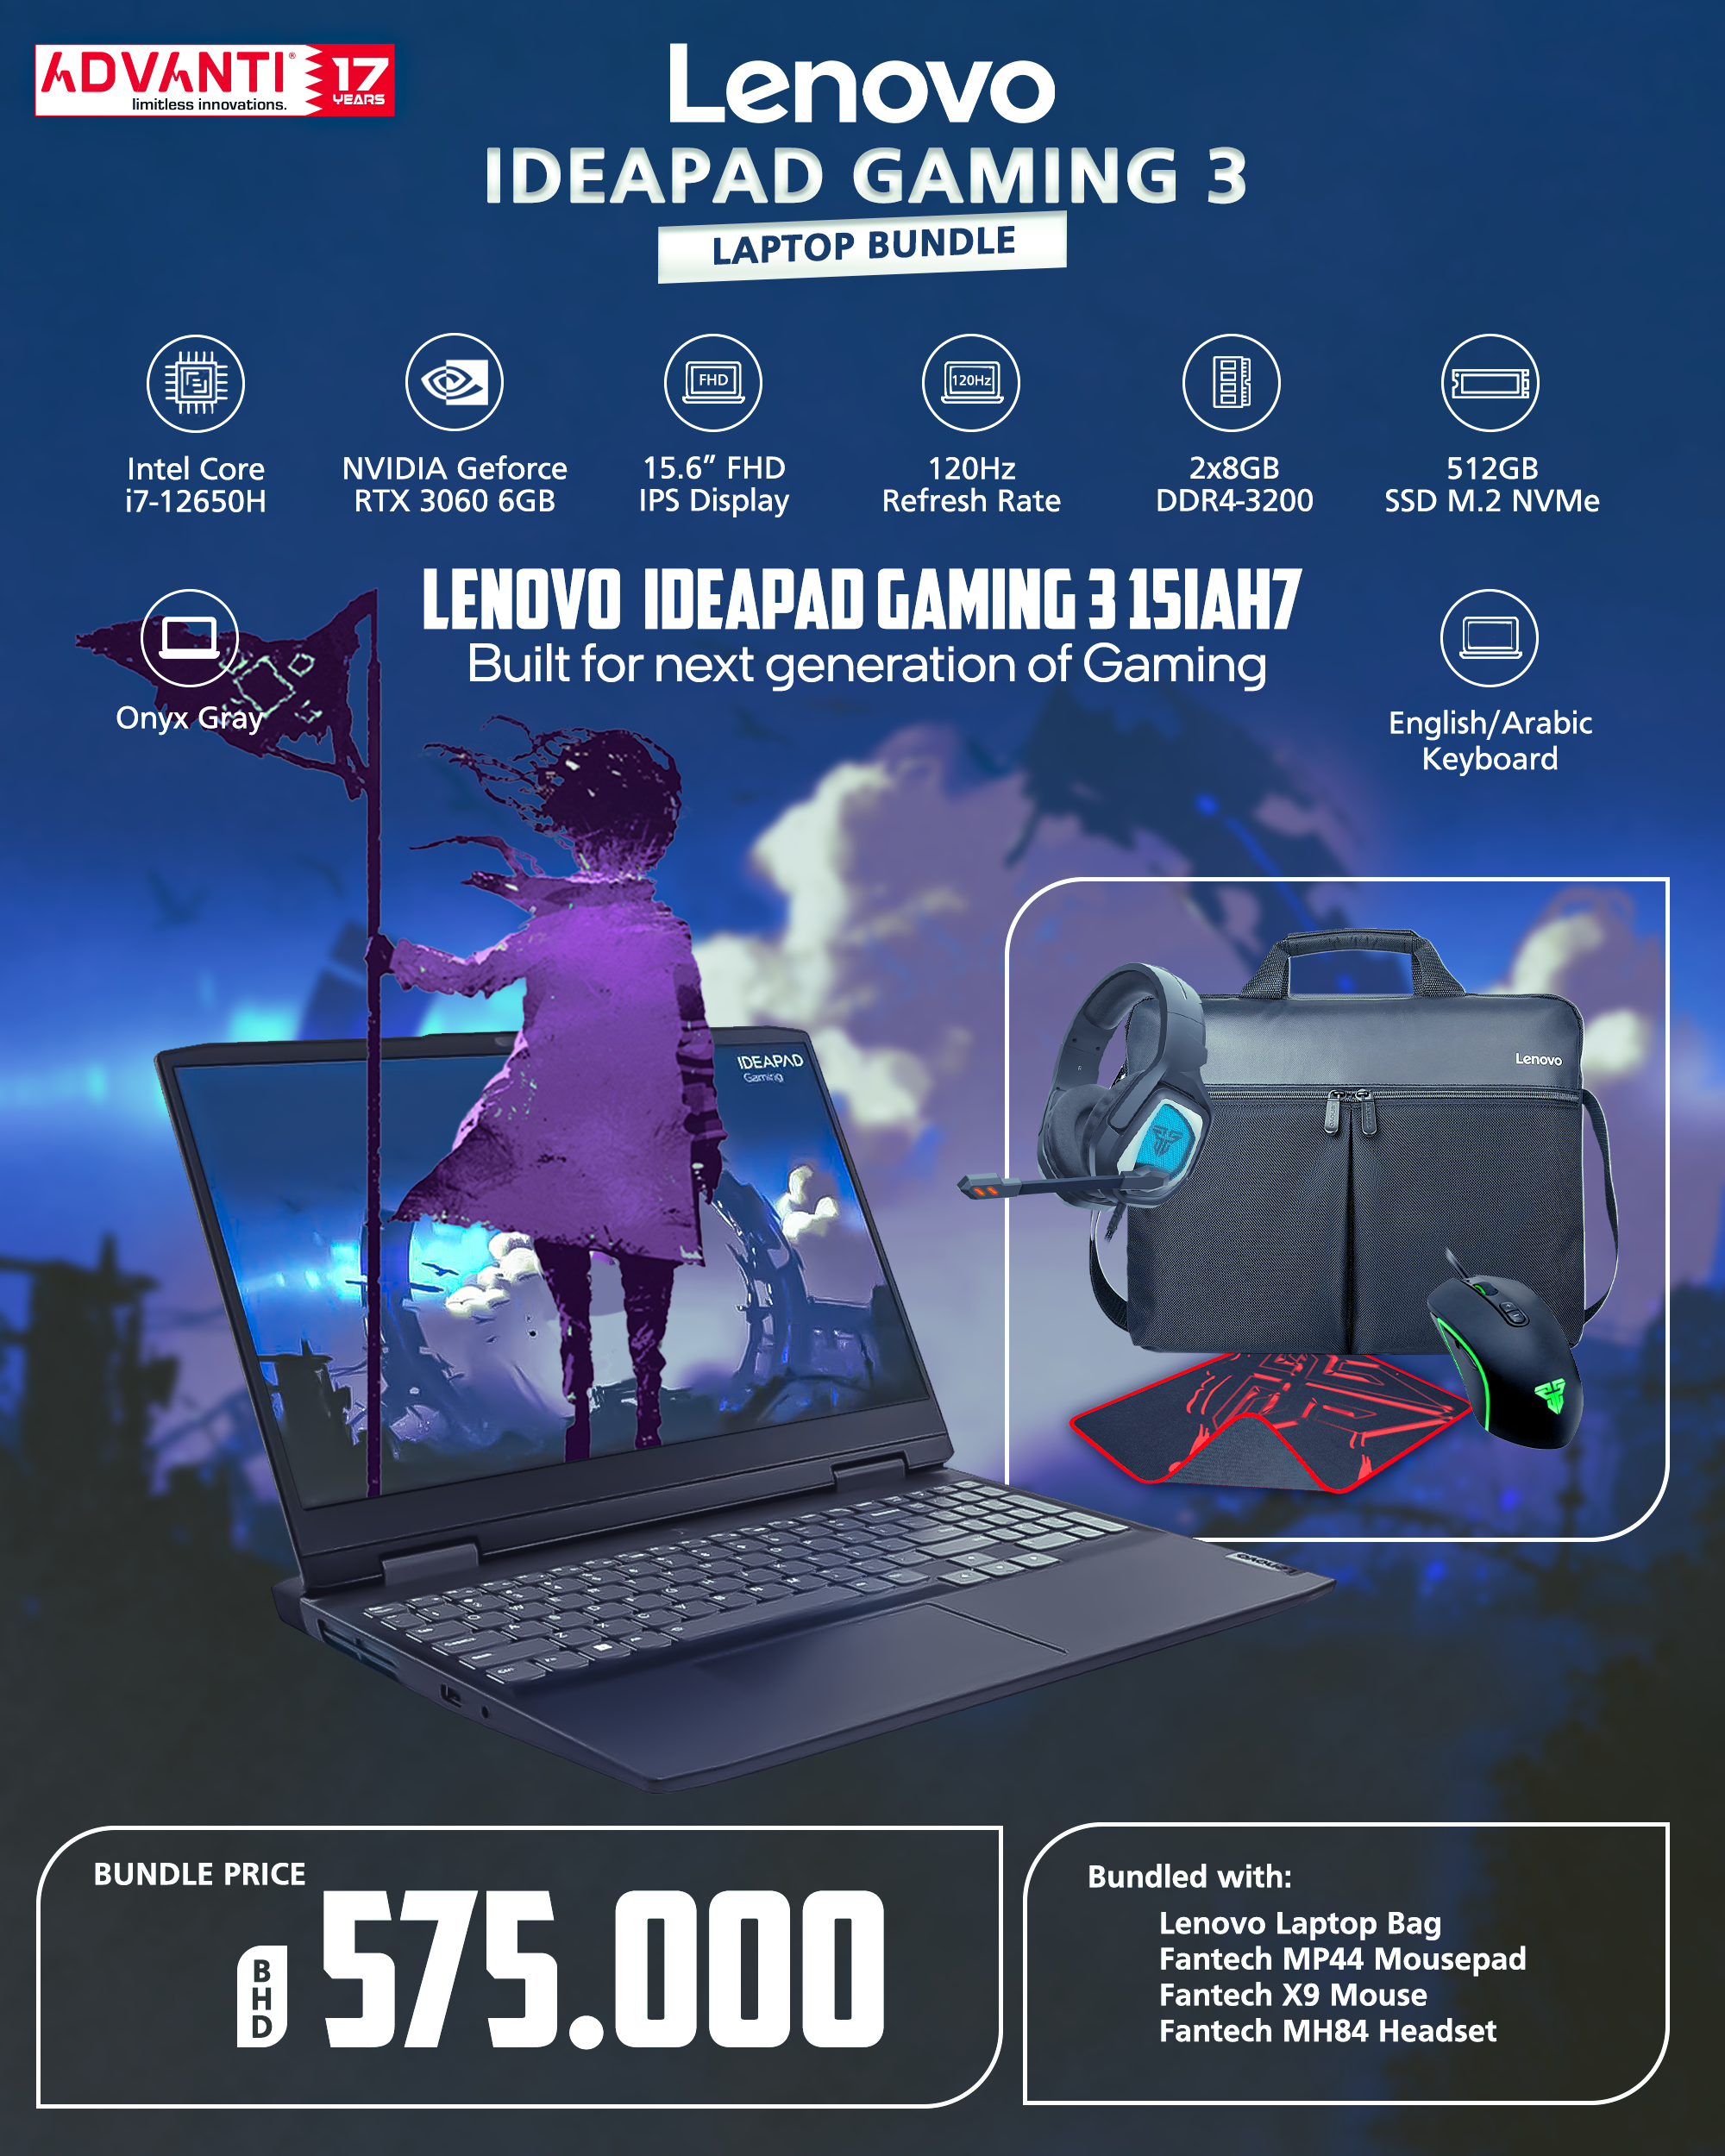 lenovo-ideapad-gaming-3-laptop-bundle.pn